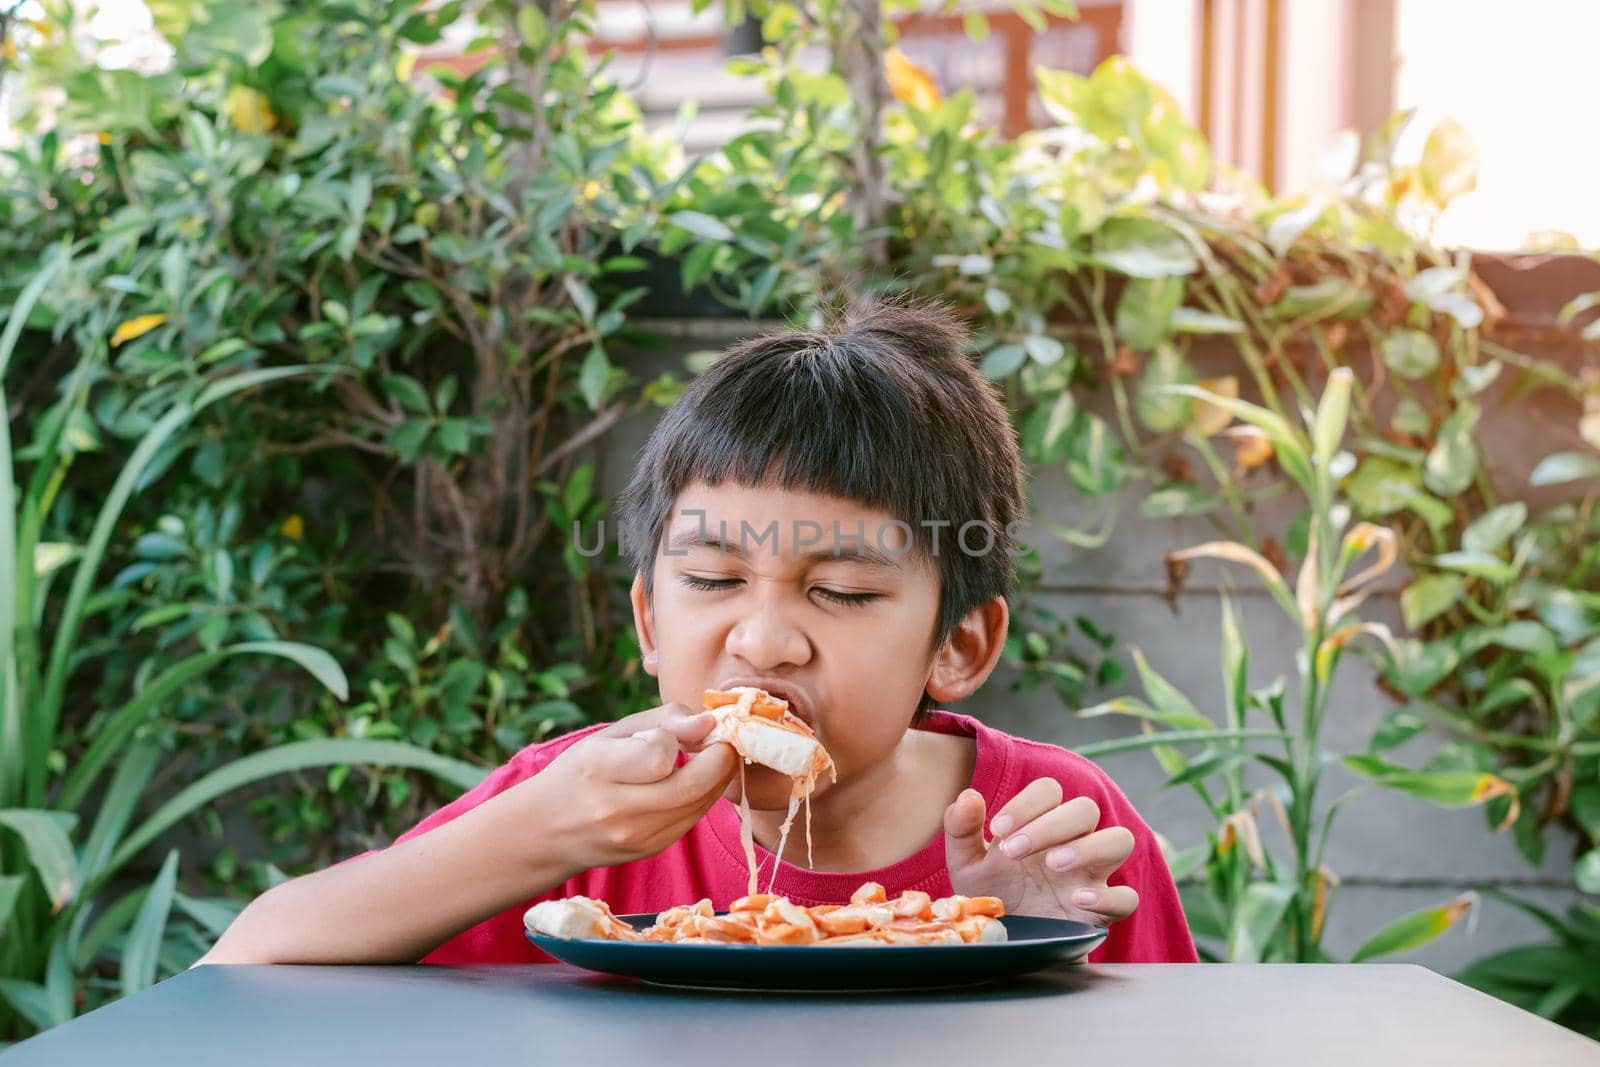 Asian cute boy in red shirt eating pizza. by wattanaphob